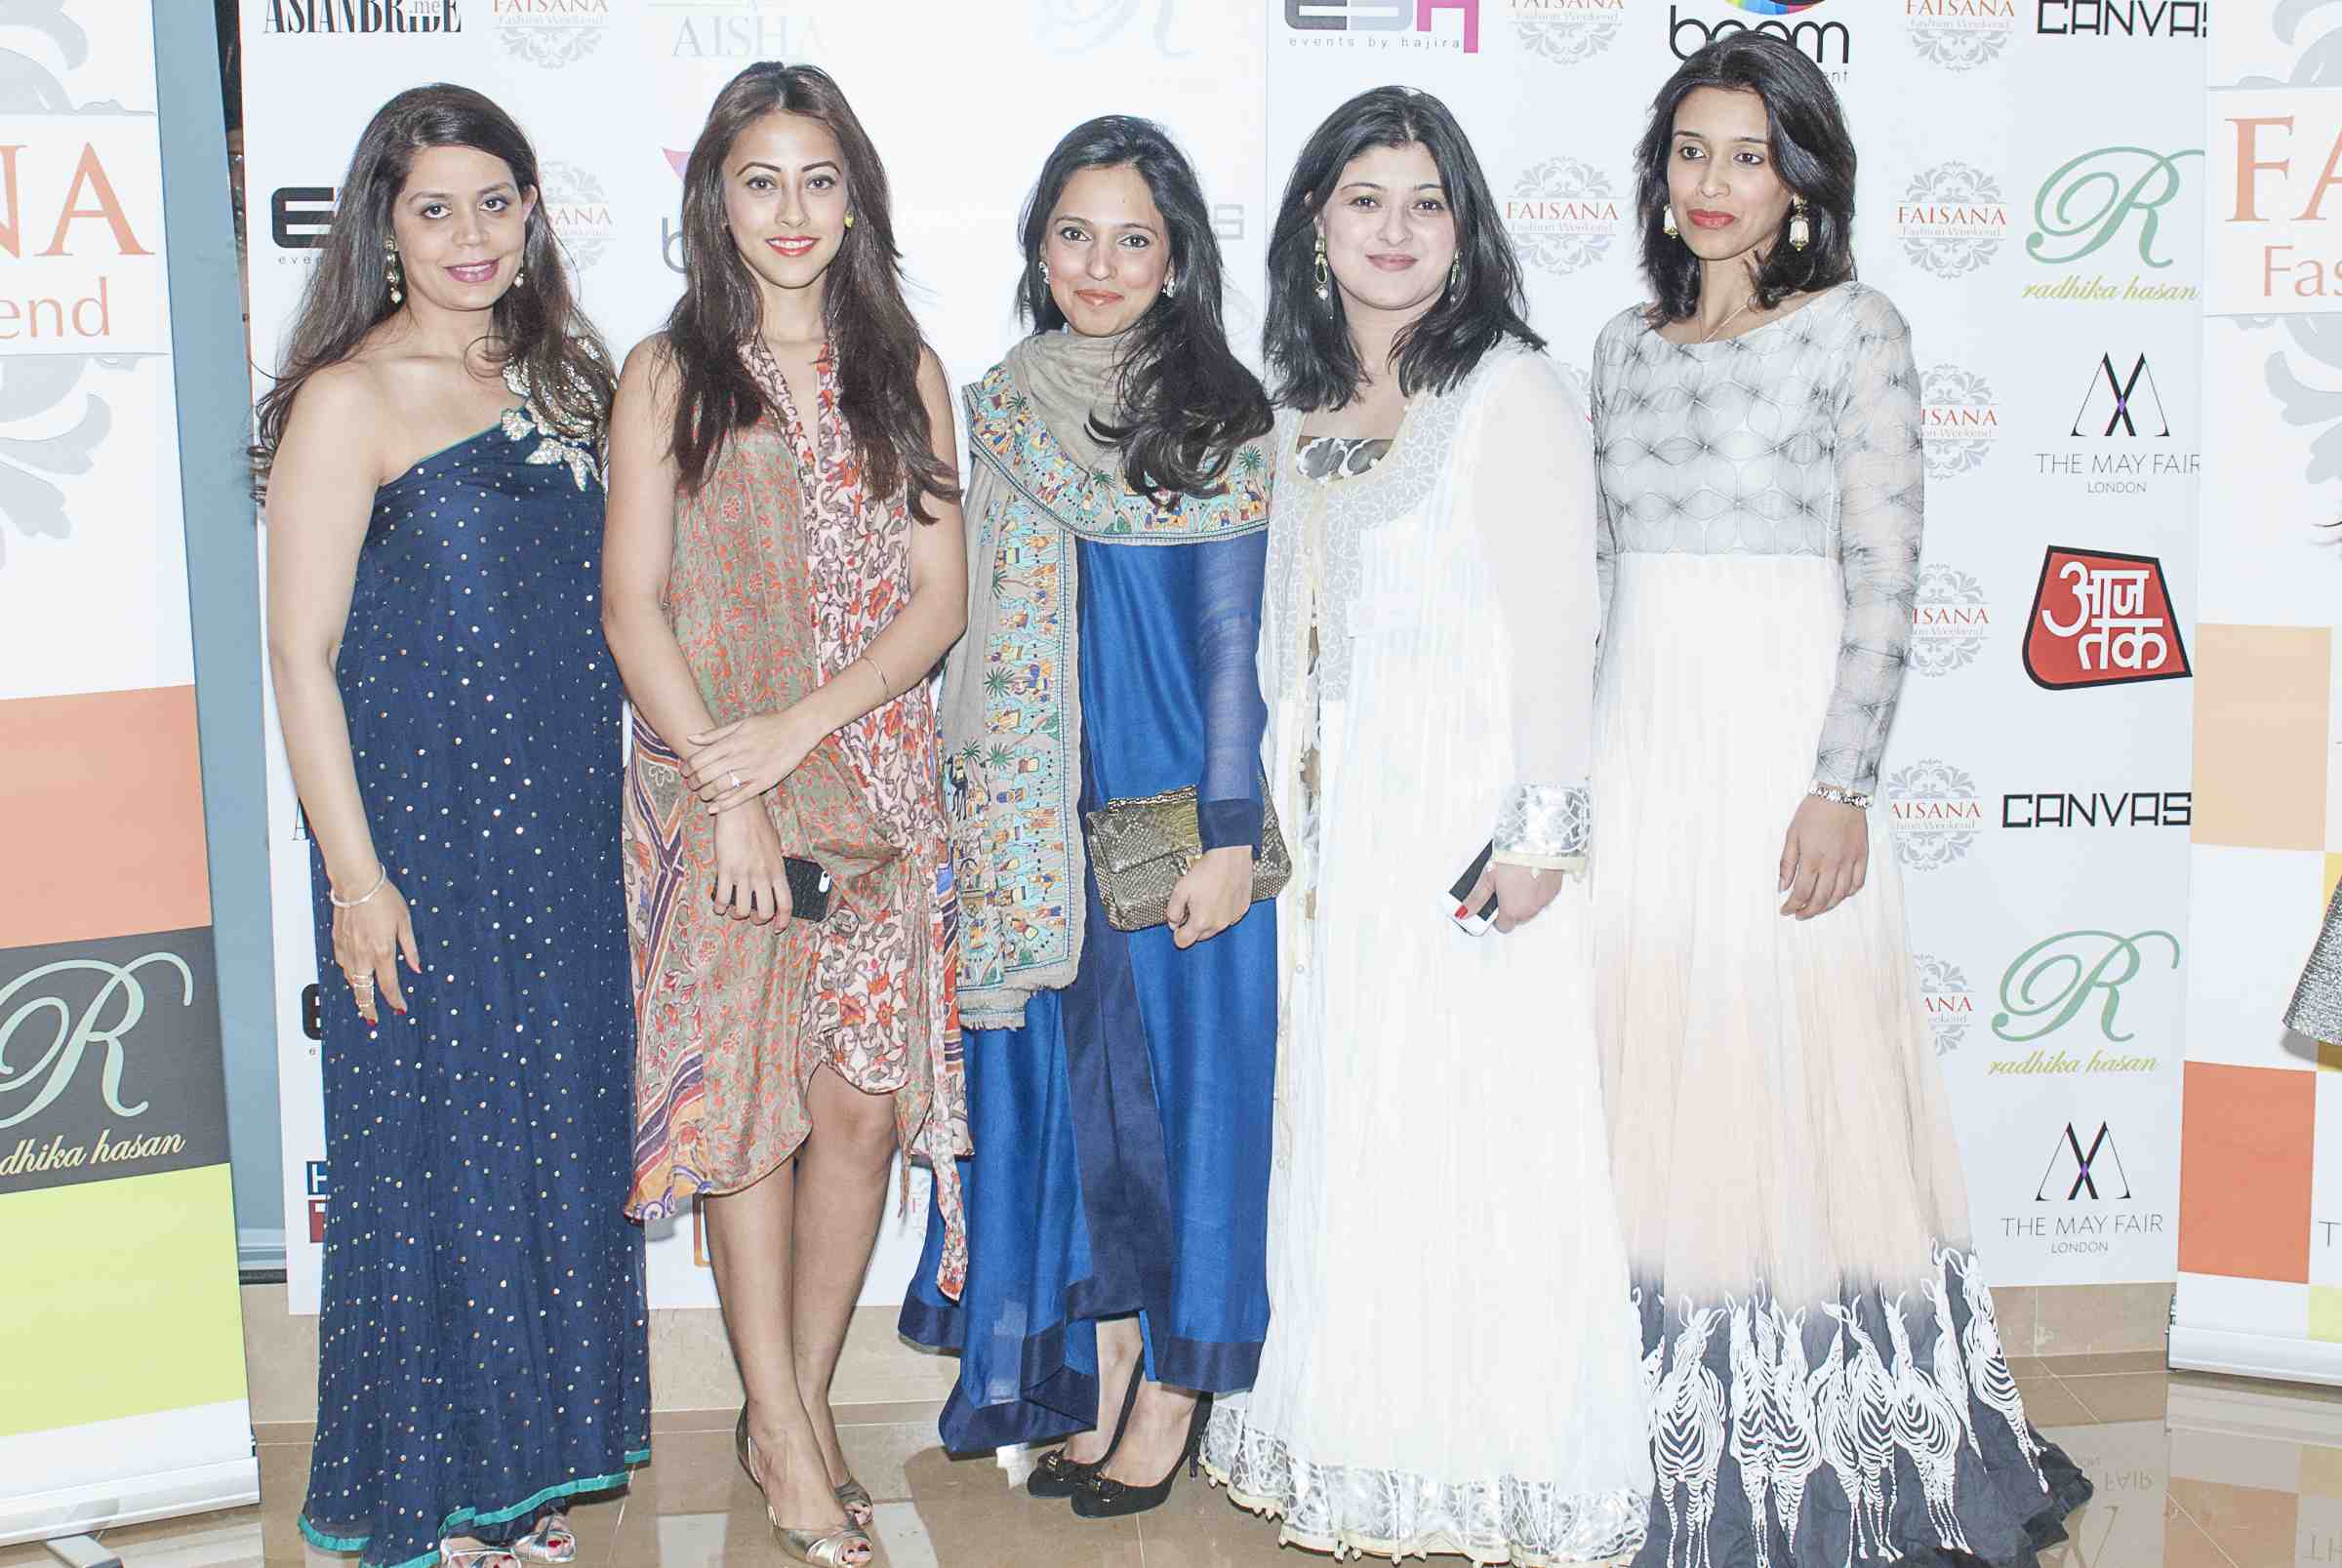 Aamna Lakhany, Nida Azwer, Aisha Tabani Chowdhry and guests